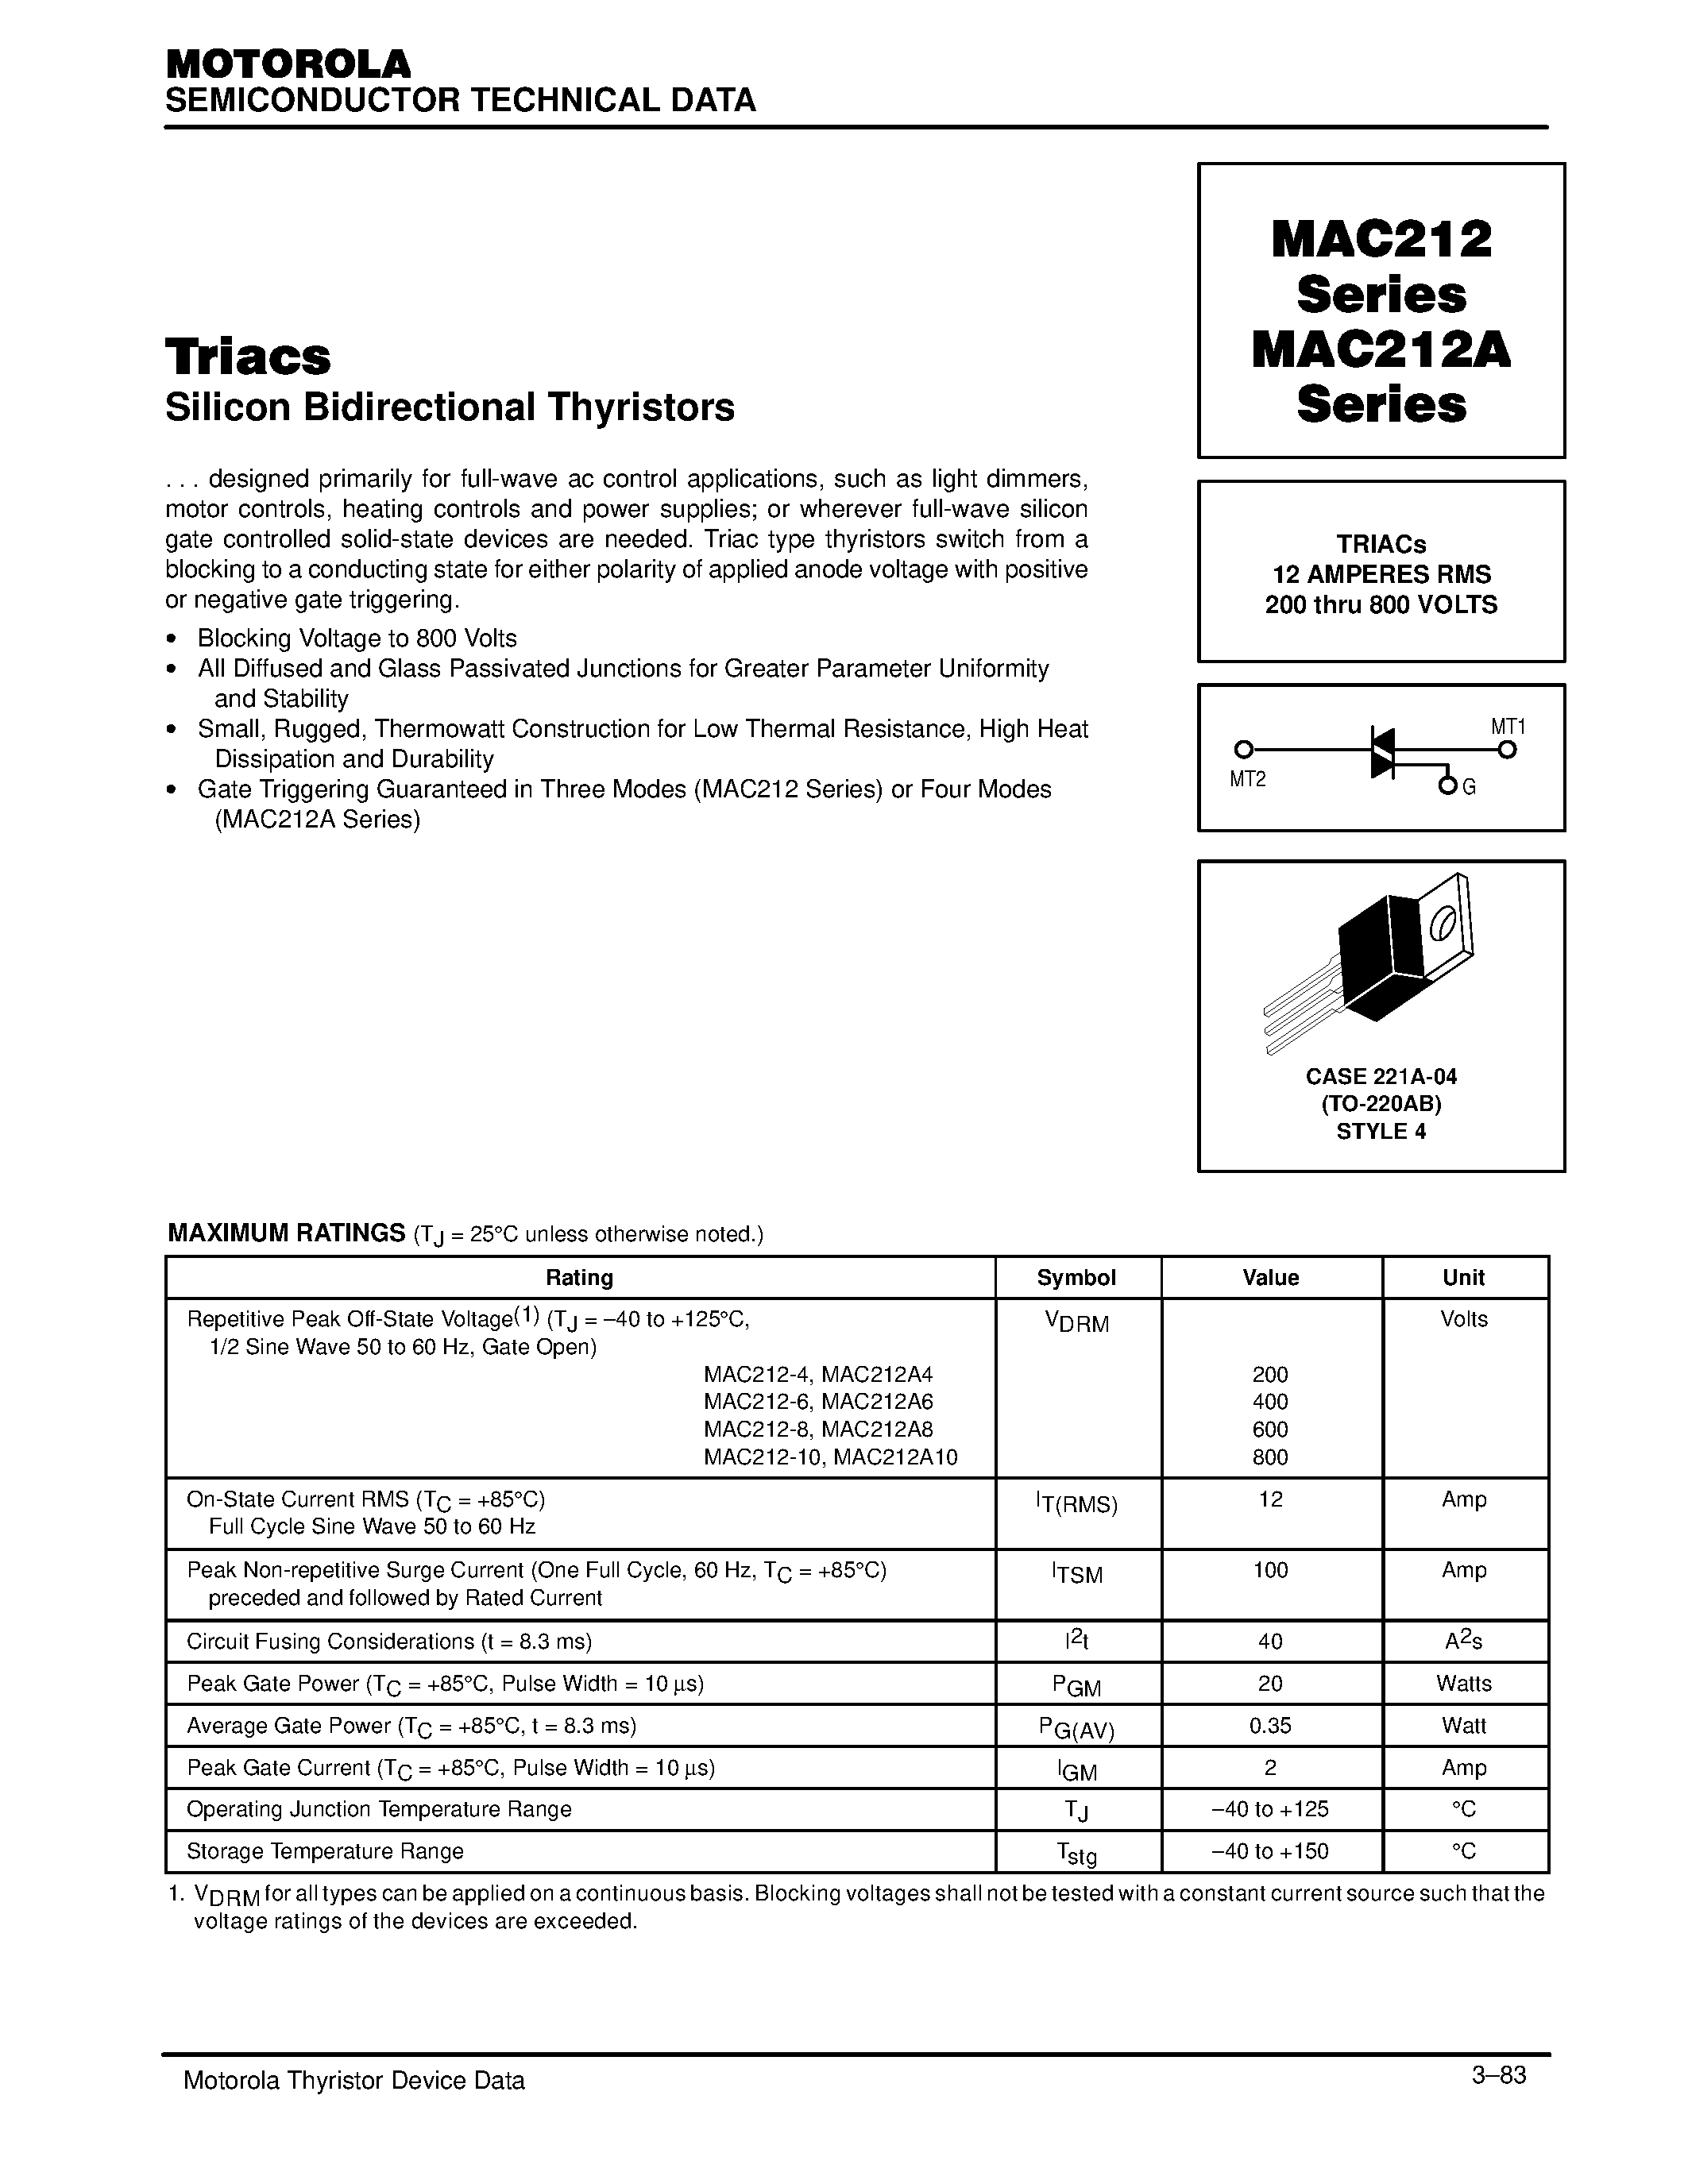 Datasheet MAC212-10 - TRIACs 12 AMPERES RMS 200 thru 800 VOLTS page 1